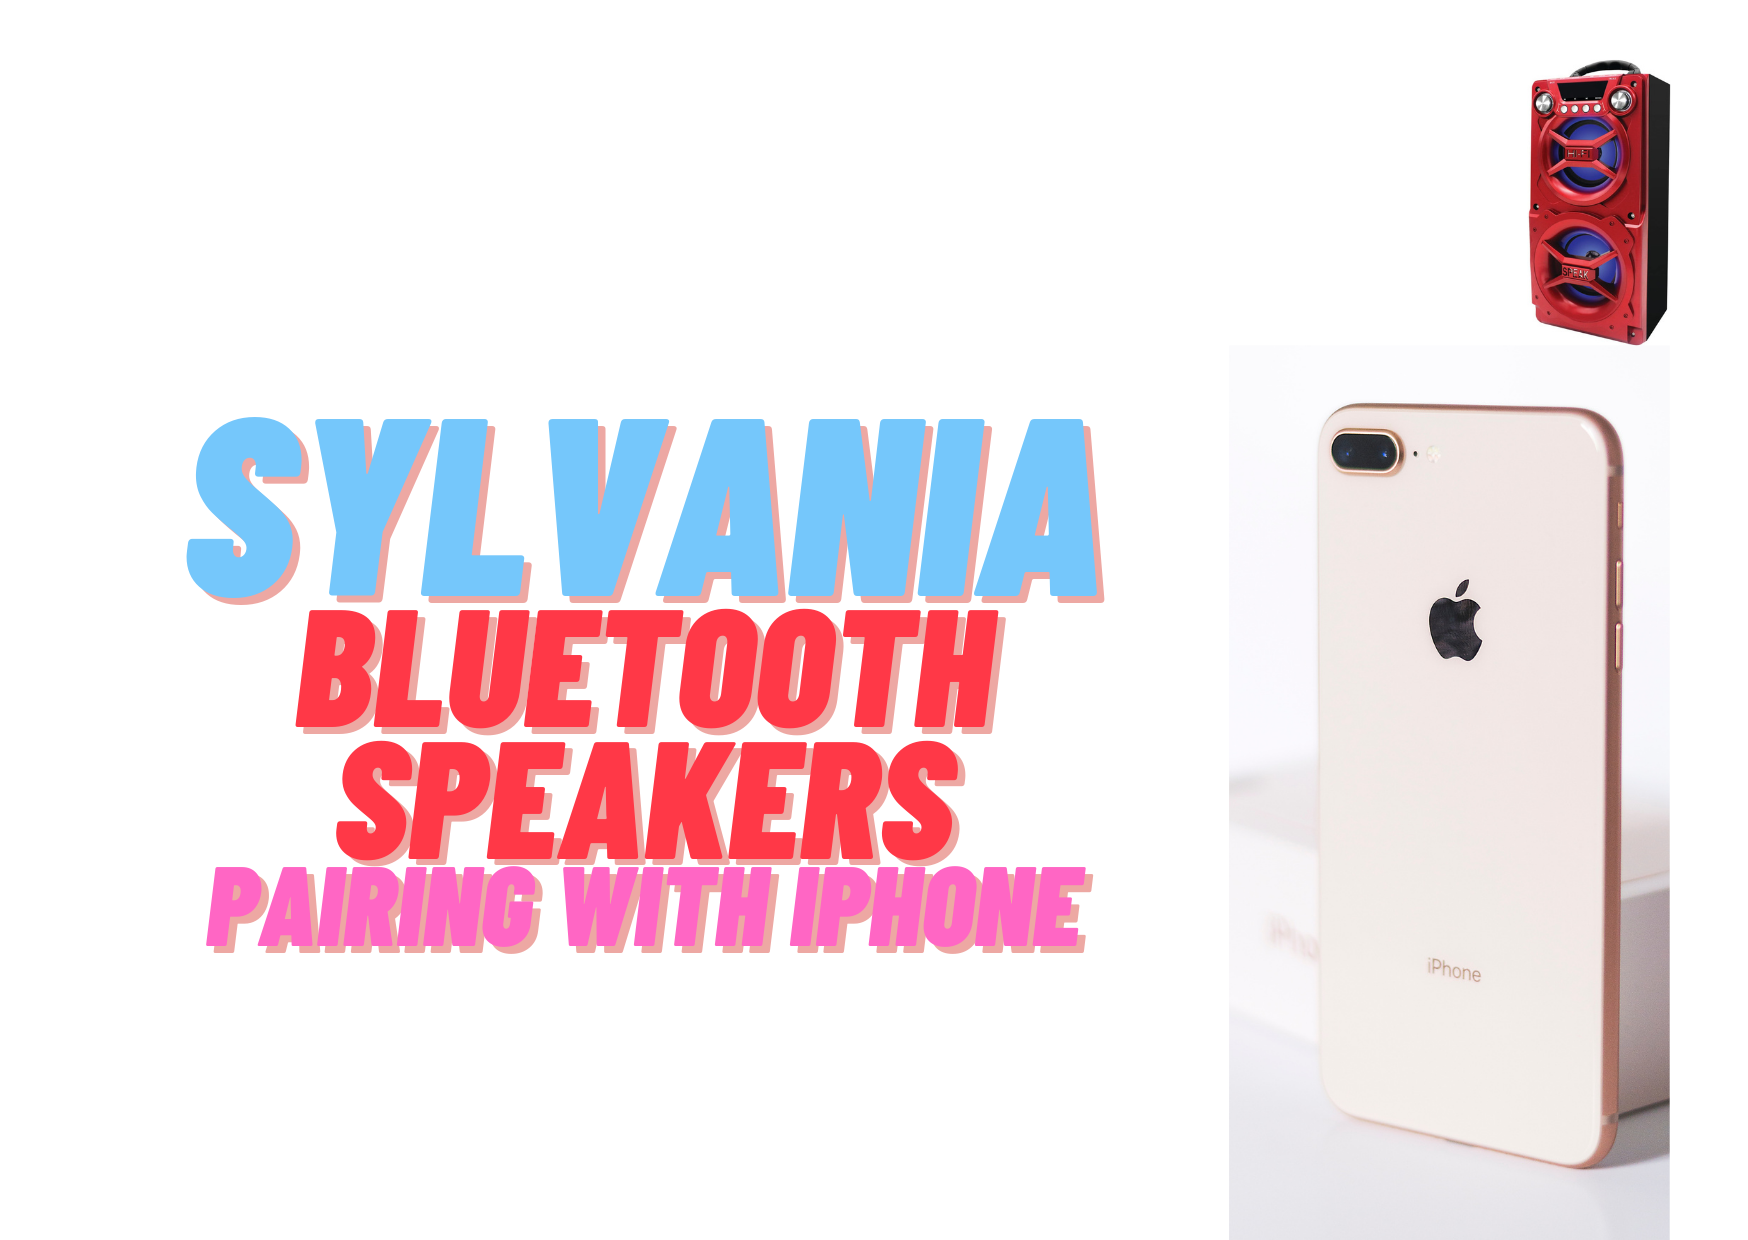 connect Sylvania Bluetooth speaker to iphone